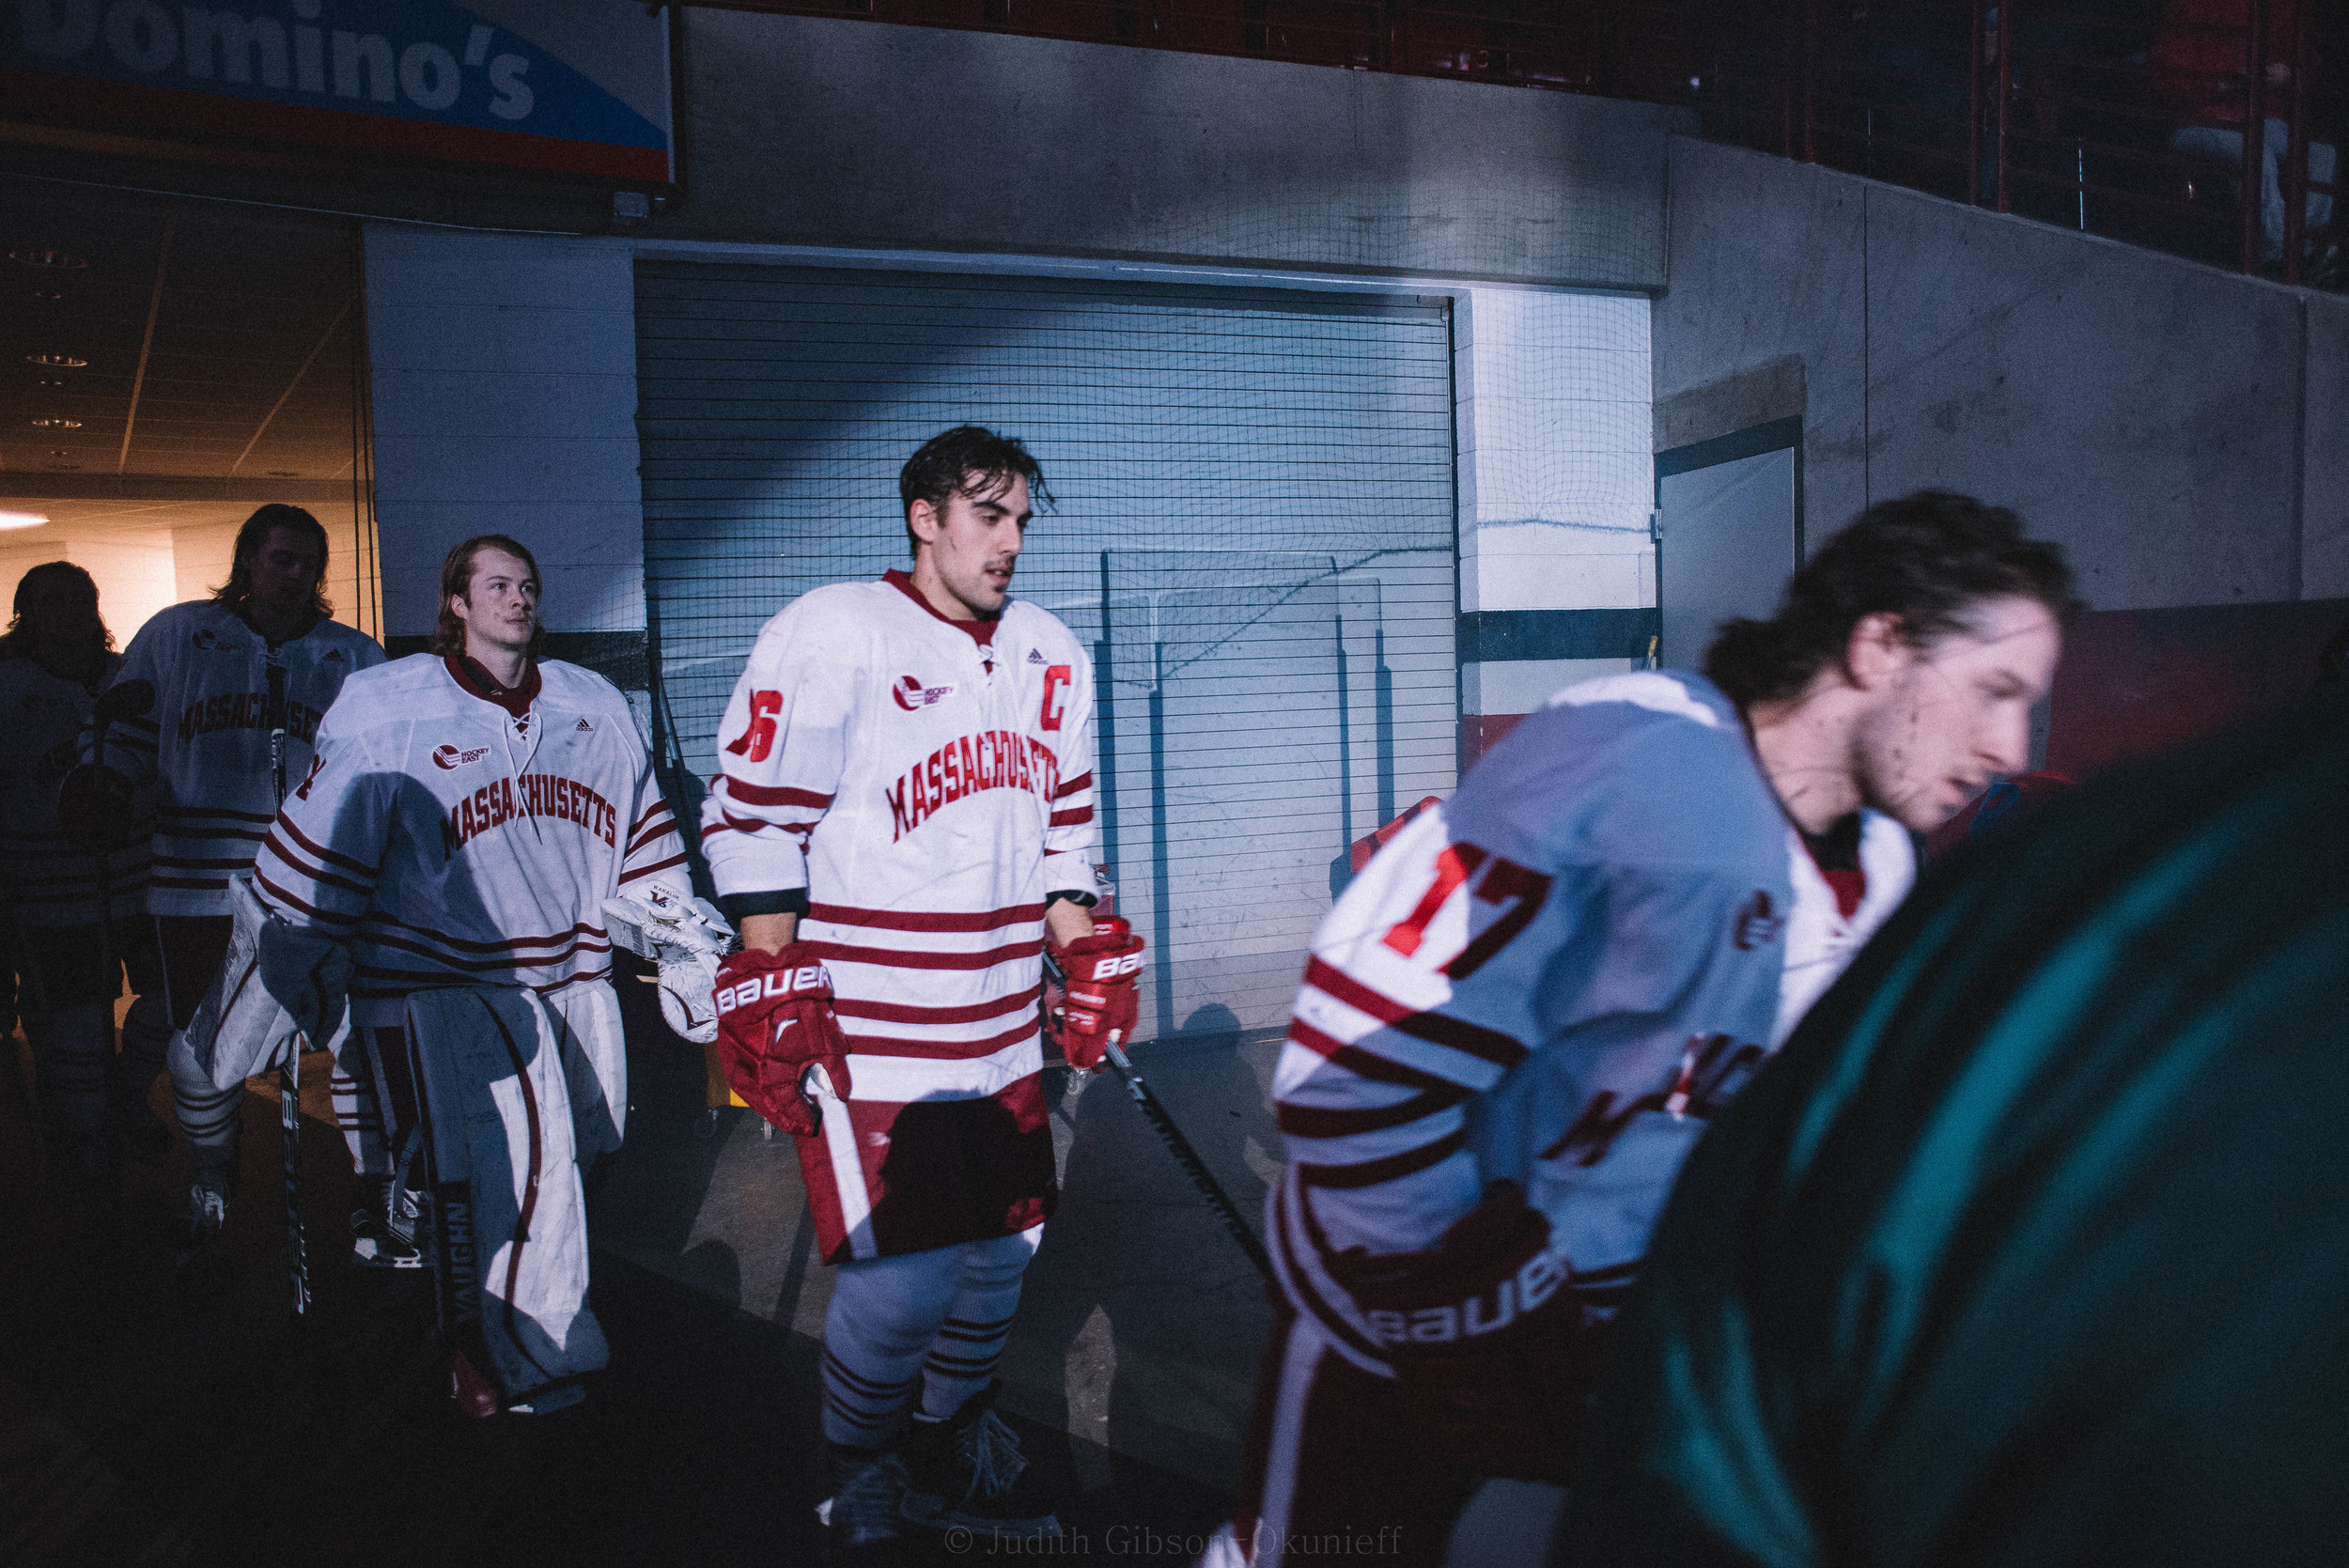  UMass Men's Ice Hockey lost to Merrimack 4-2 at the Mullins Center Friday night.

Photo by Judith Gibson-Okunieff 